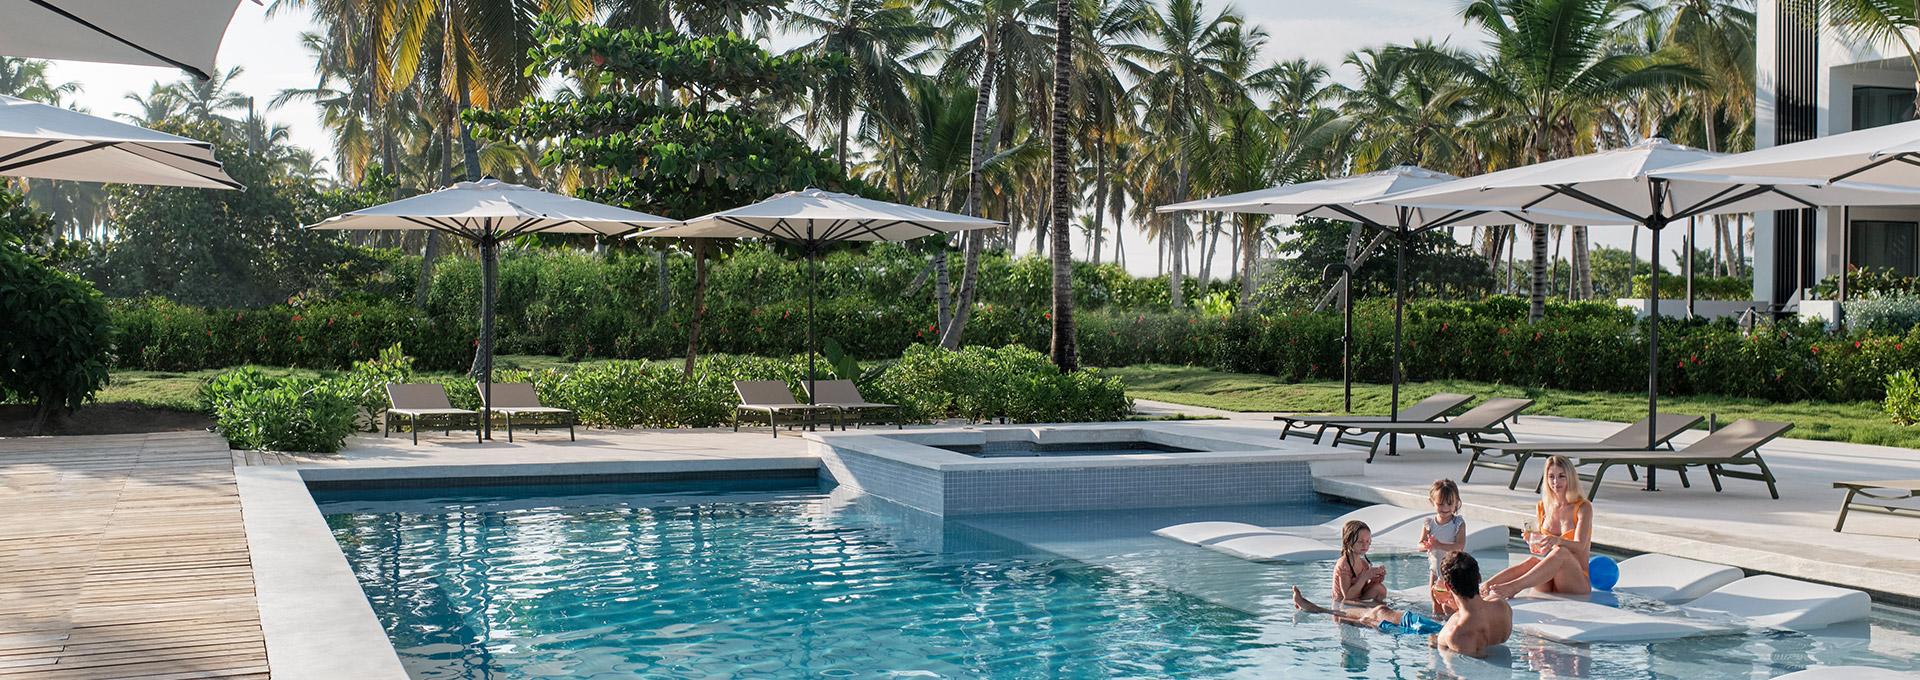 Finest resort pool